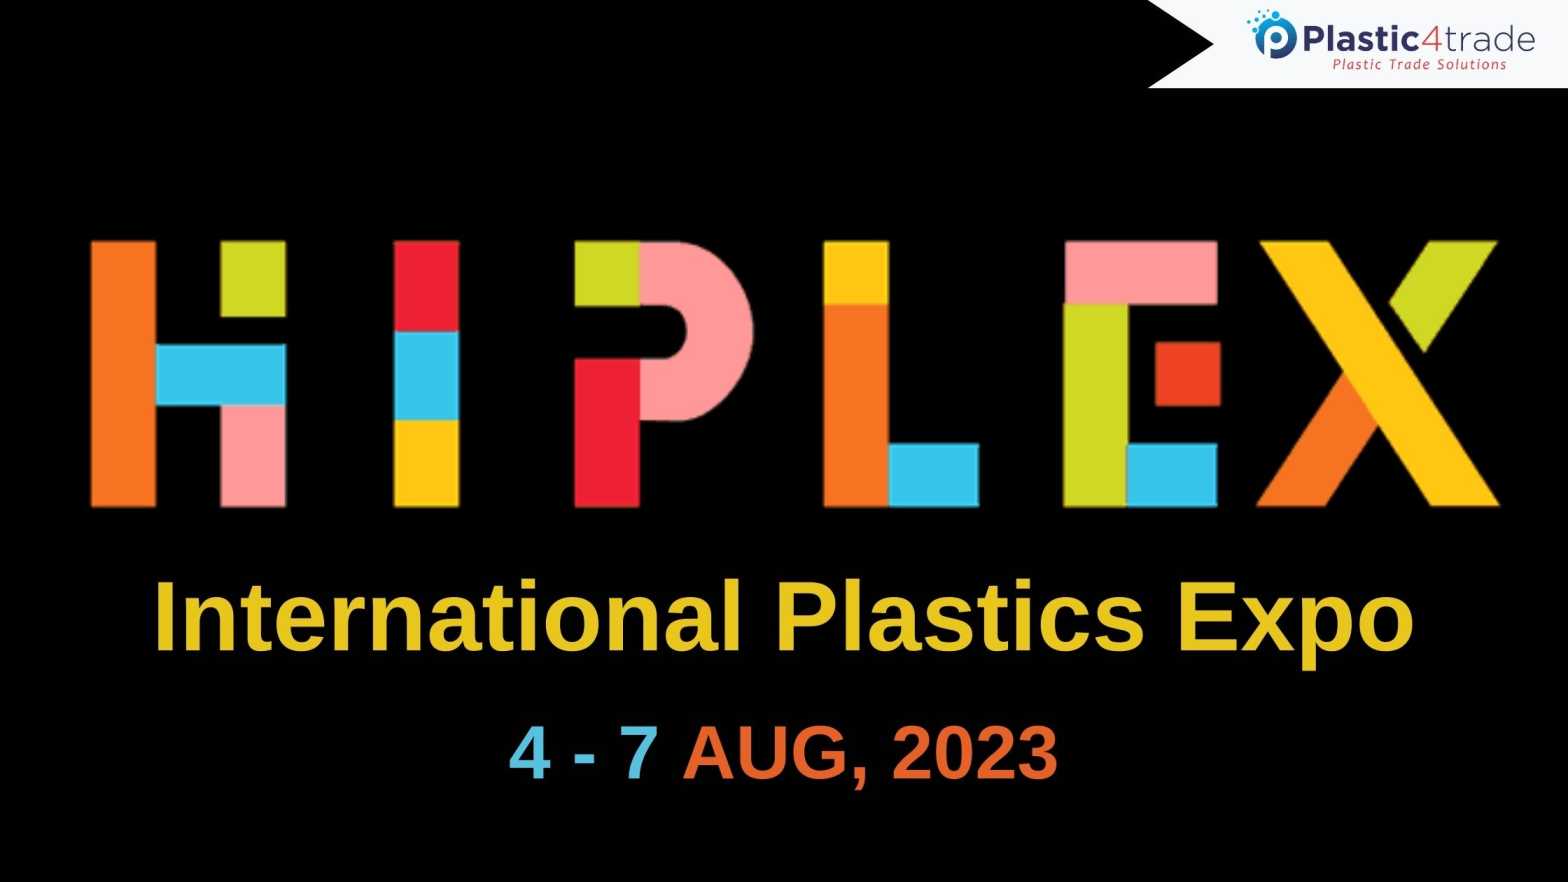 HIPLEX International Plastics Expo 2023 Plastic4trade